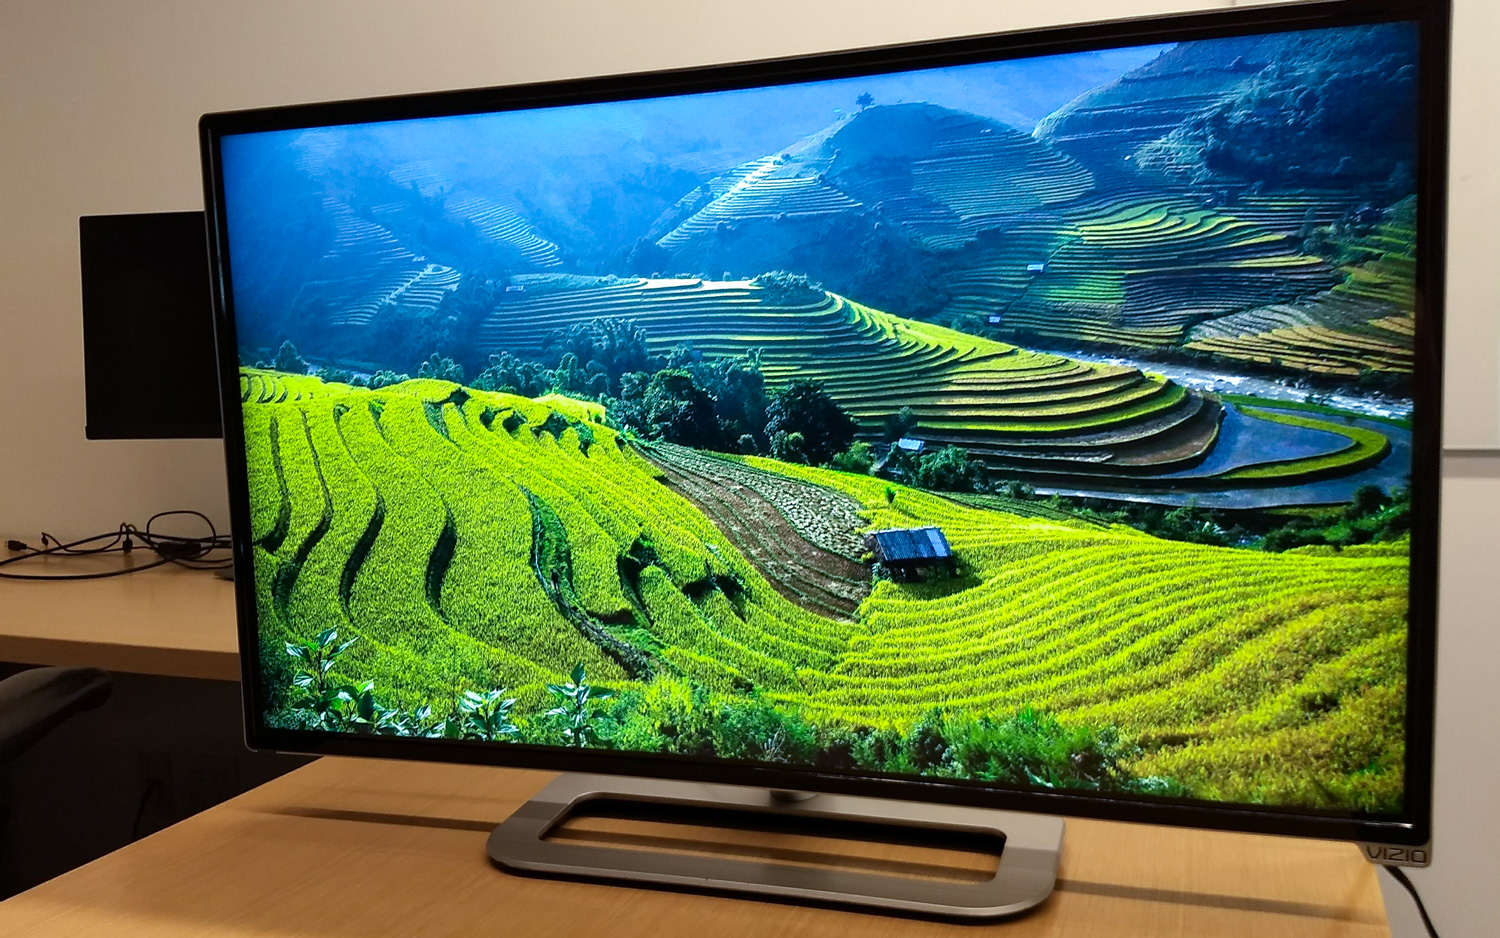 Google Chromecast hides behind stylish TVs and desktop wallpapers